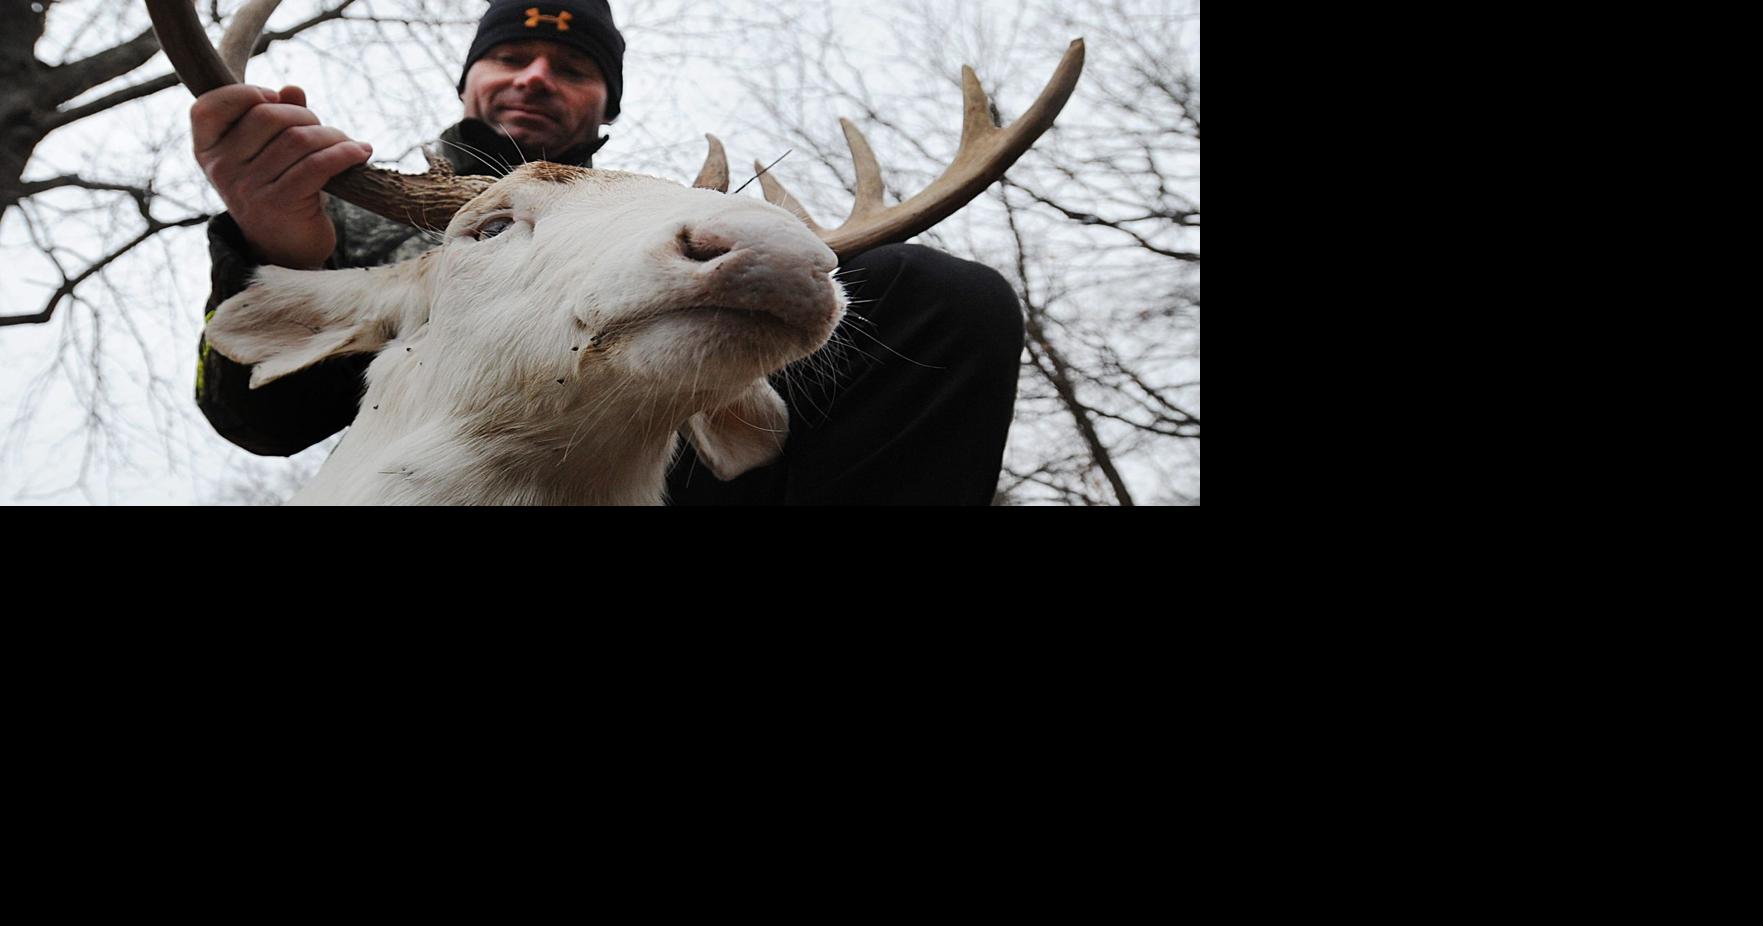 Albino deer shot after years of preservation